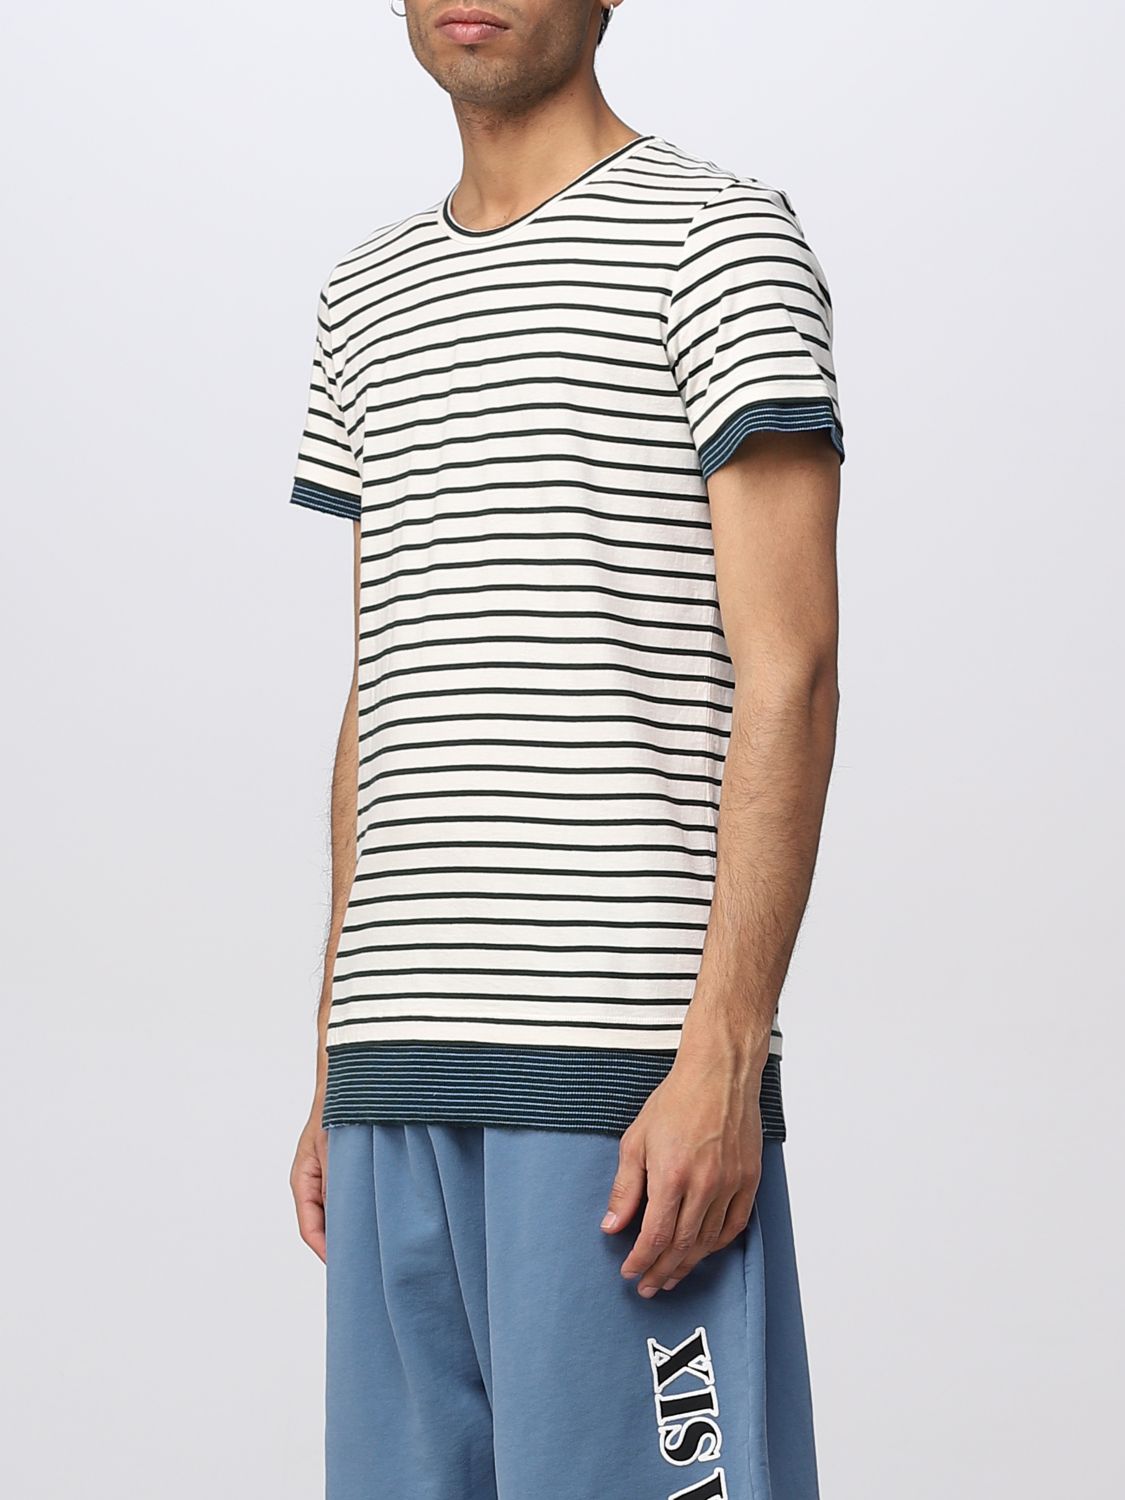 MM6 Maison Margiela Striped T-Shirt